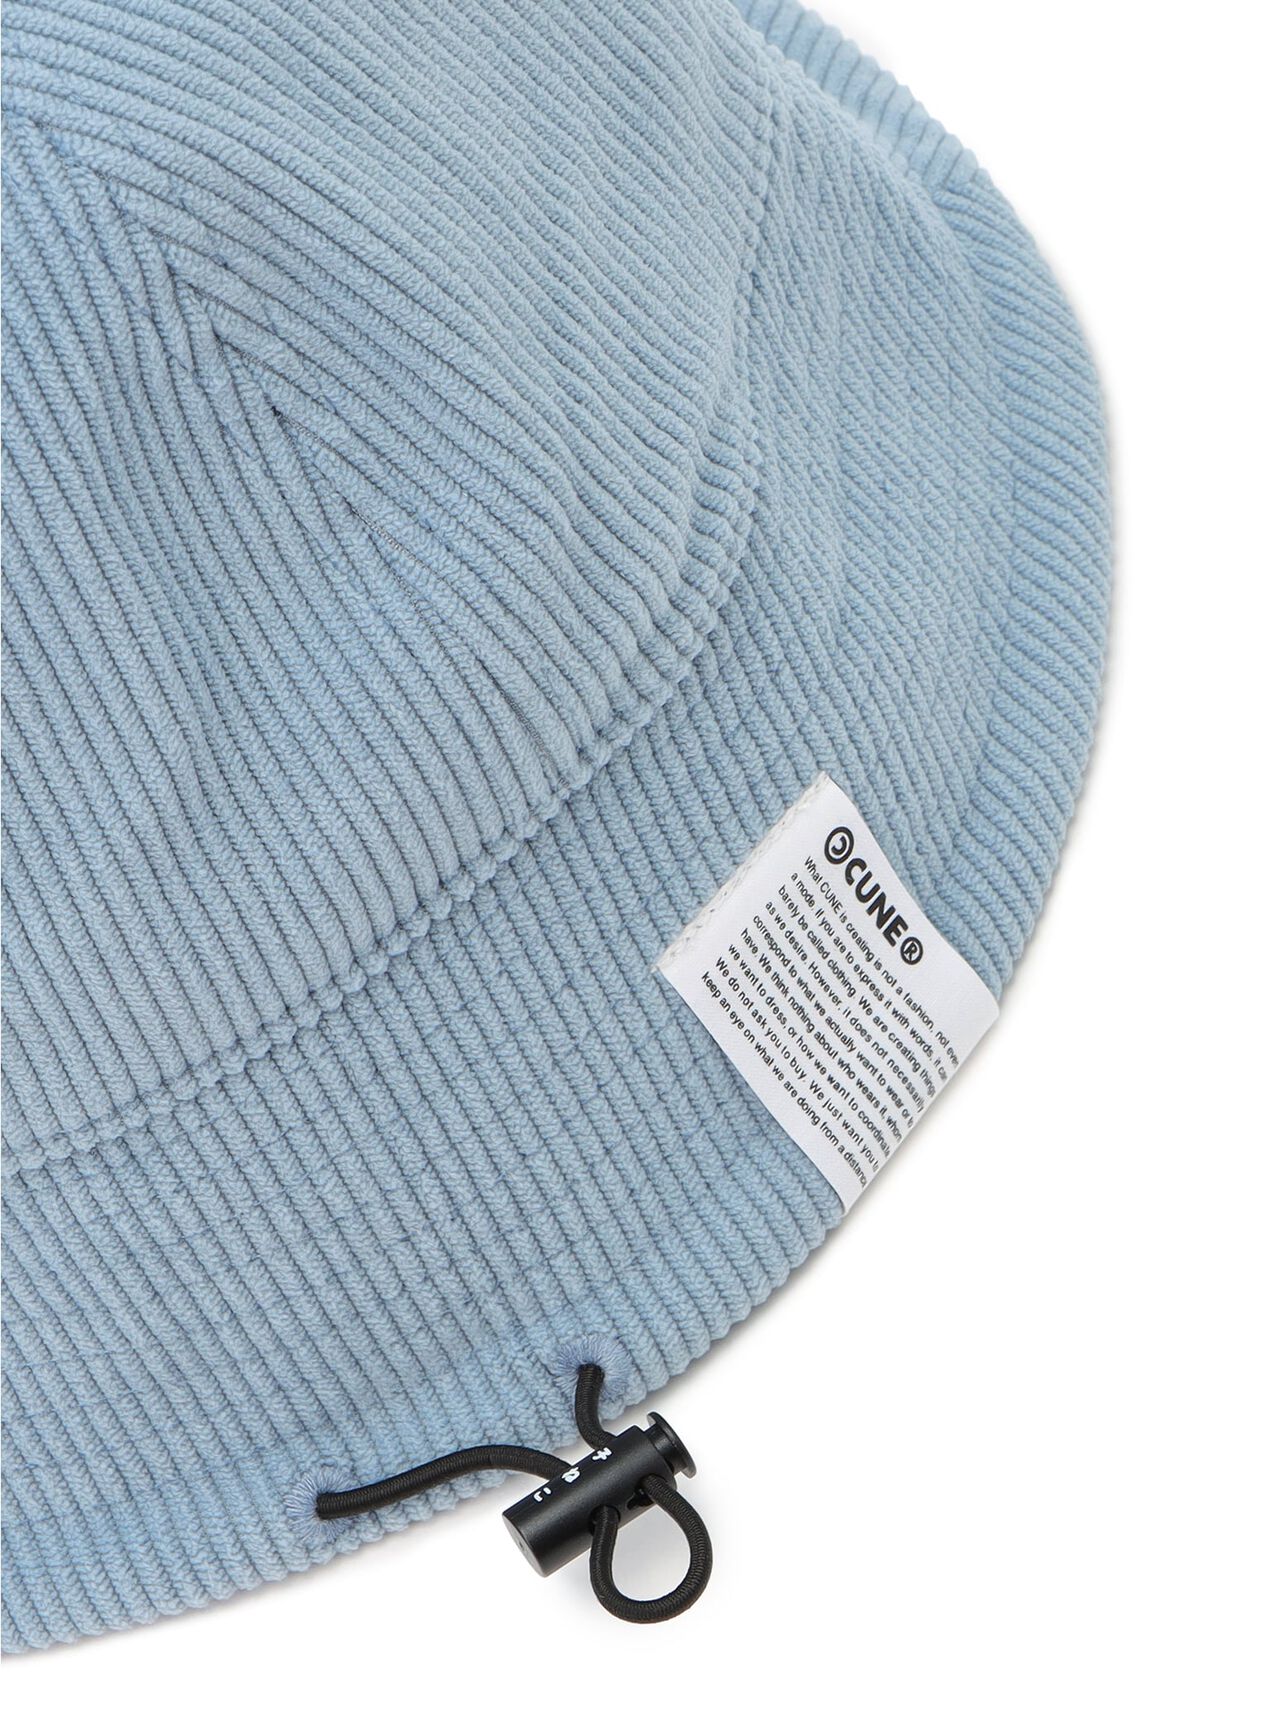 Corduroy Metro Hat,ONE, large image number 3